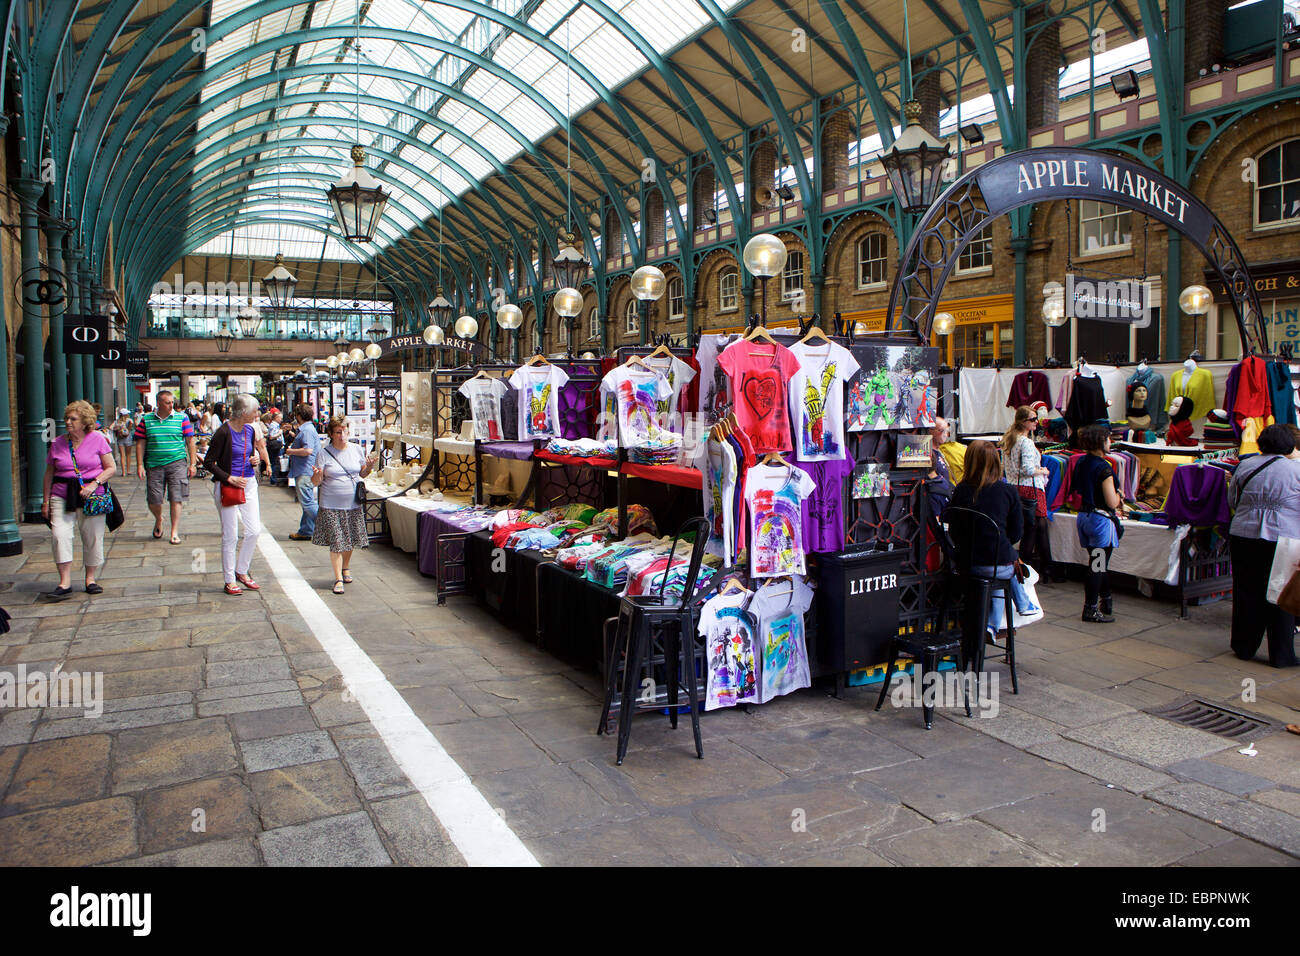 Apple Market, Covent Garden, London, England, United Kingdom, Europe Stock Photo